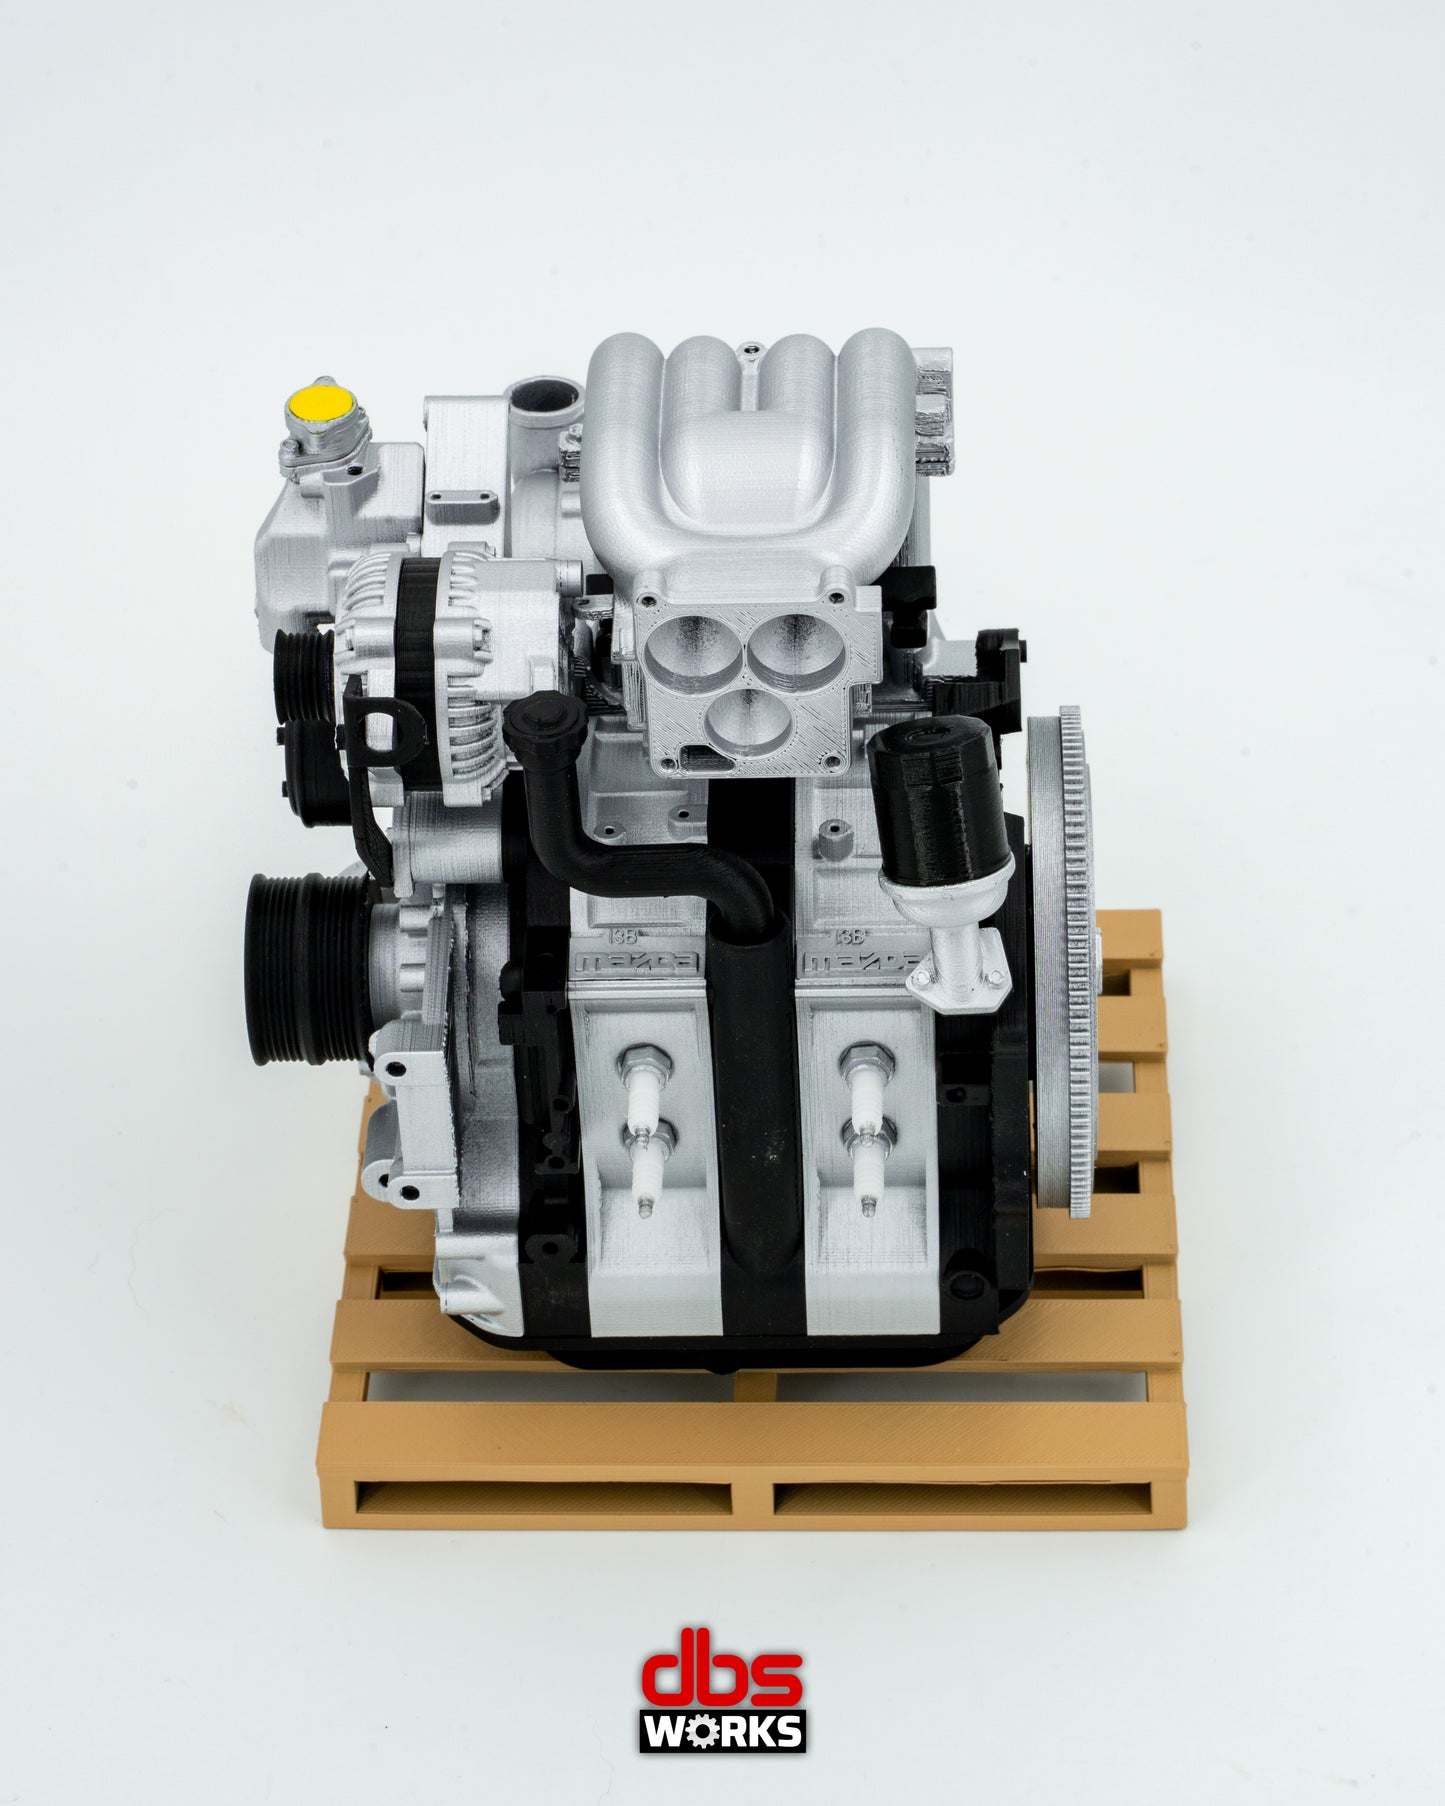 1/4 Mazda 13B Rotary Engine - Assembled